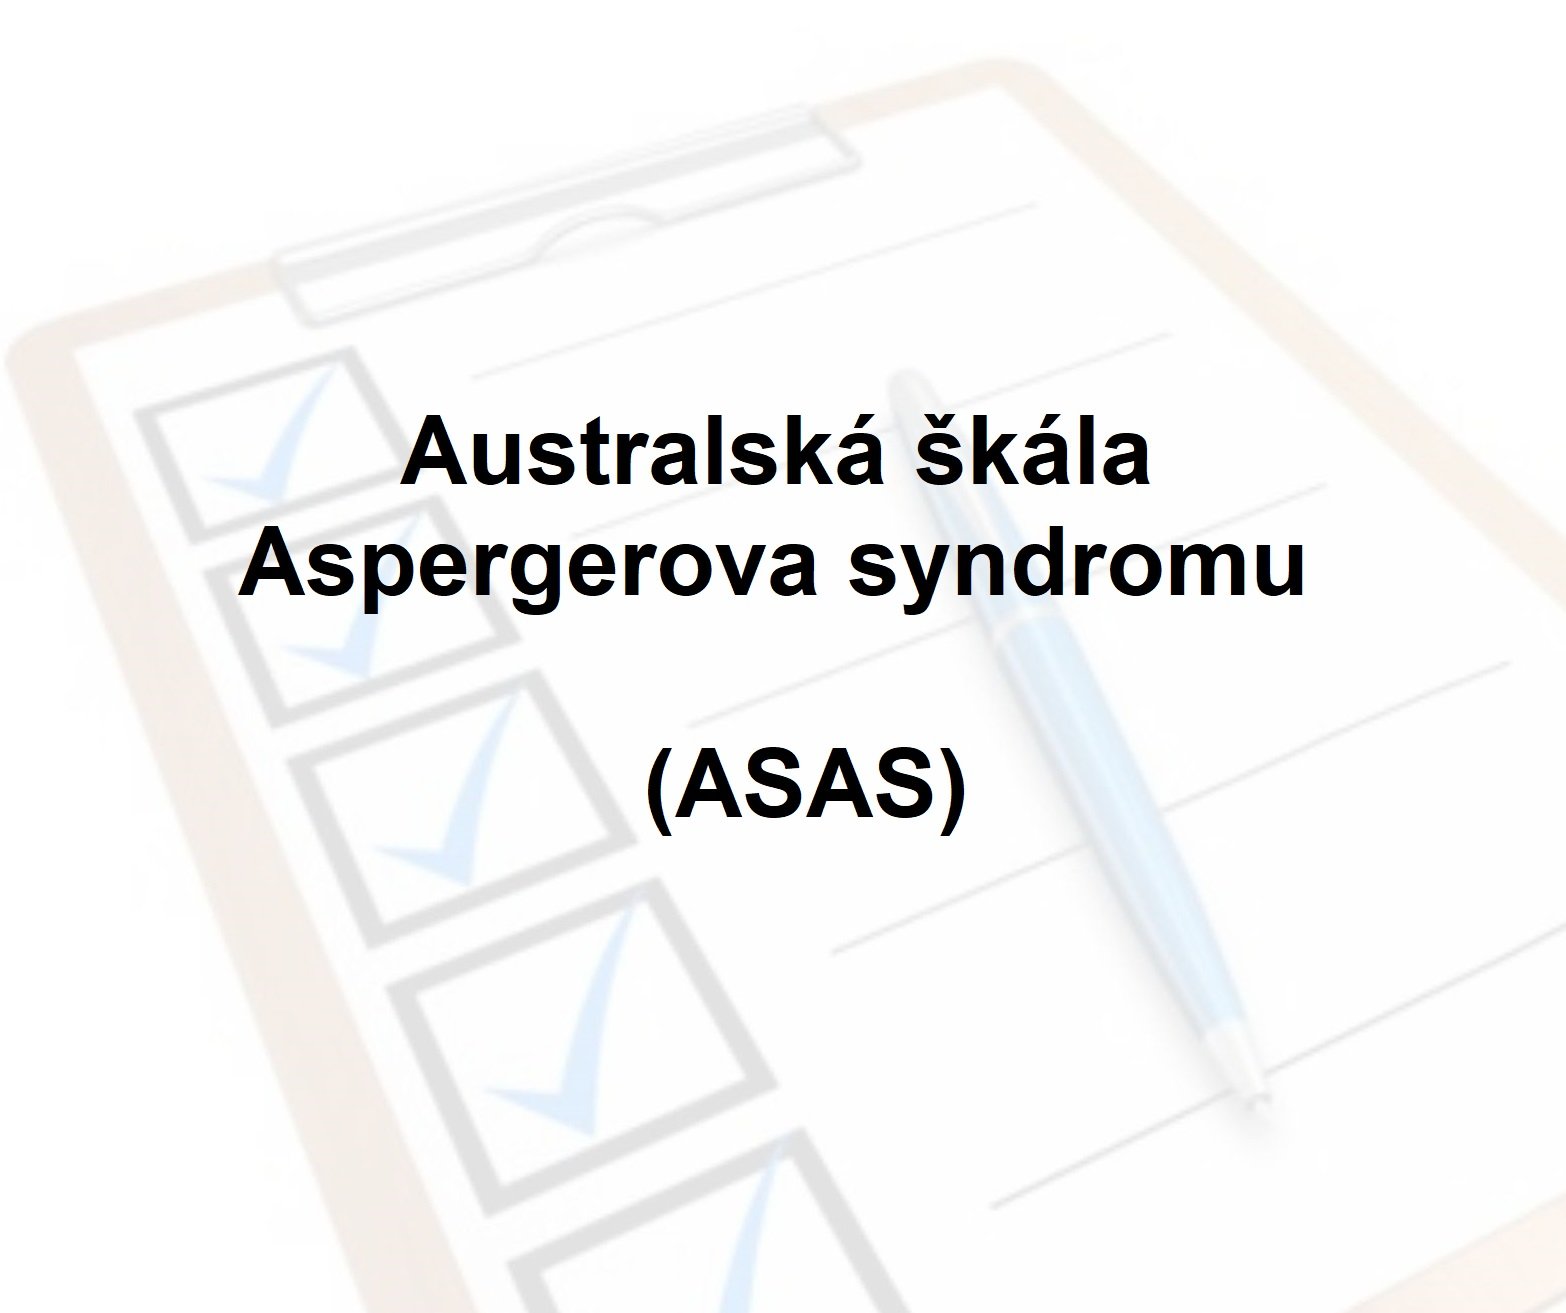 Australská škála Aspergerova syndromu (ASAS)